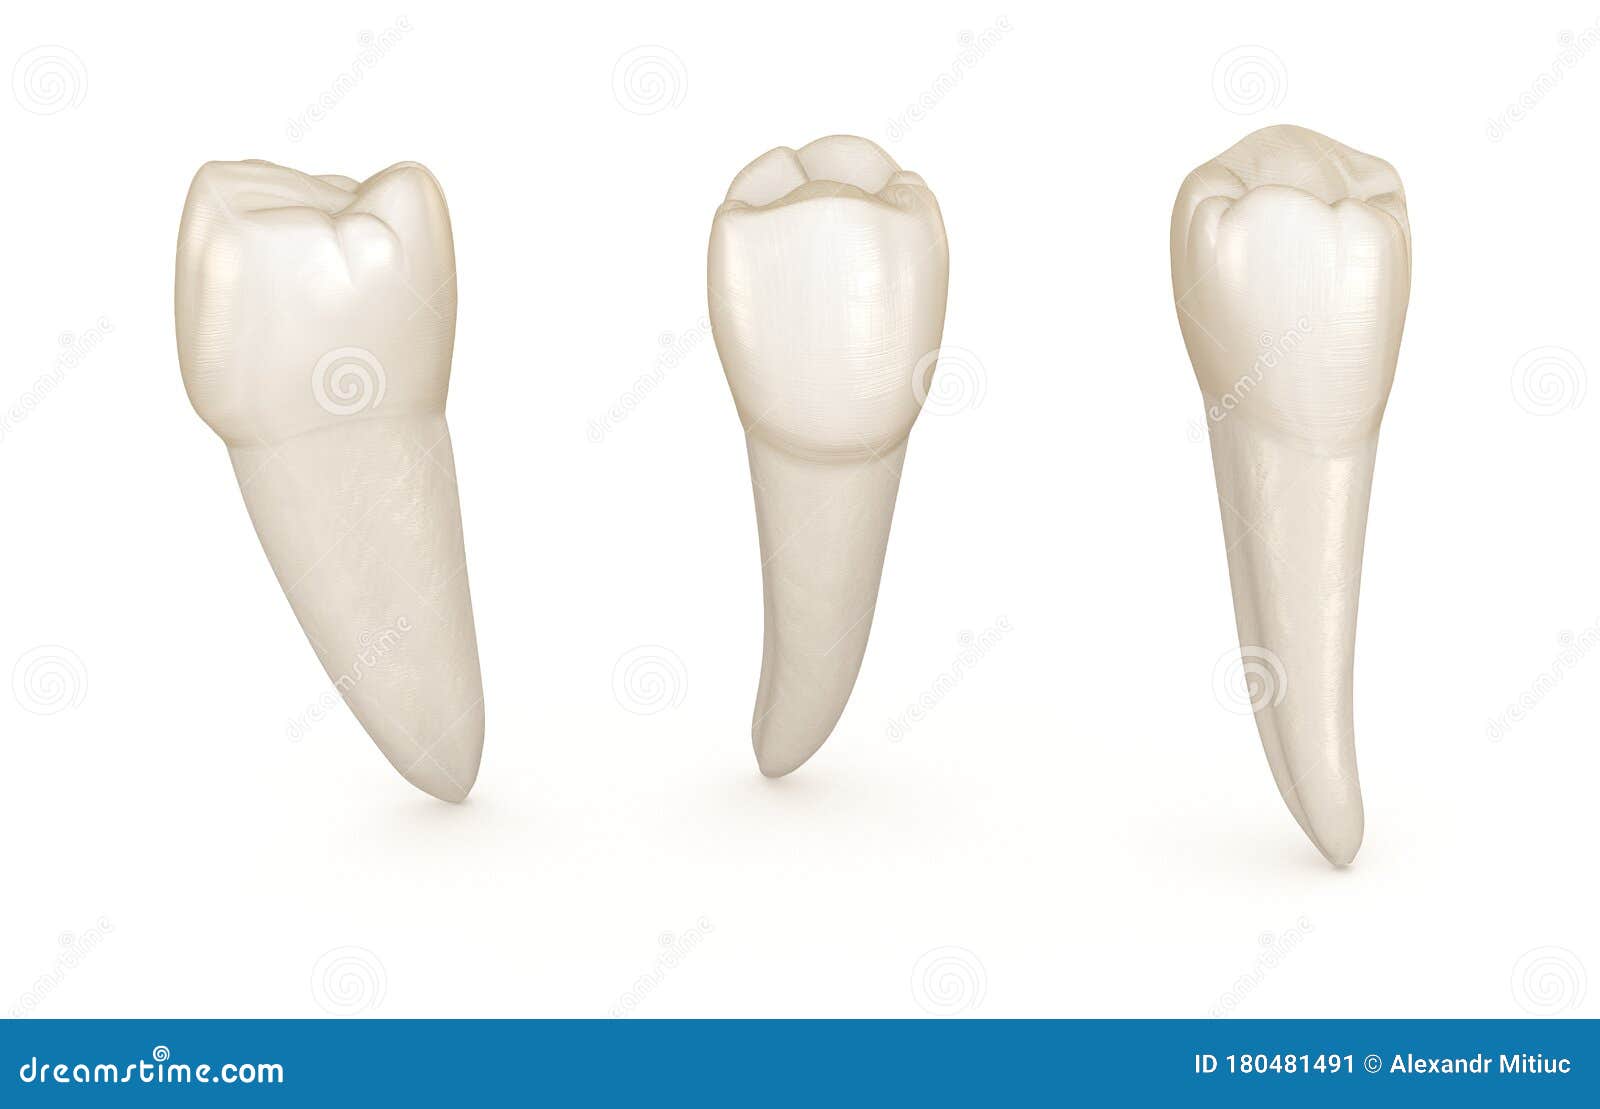 dental anatomy - mandibular premolar tooth. medically accurate dental 